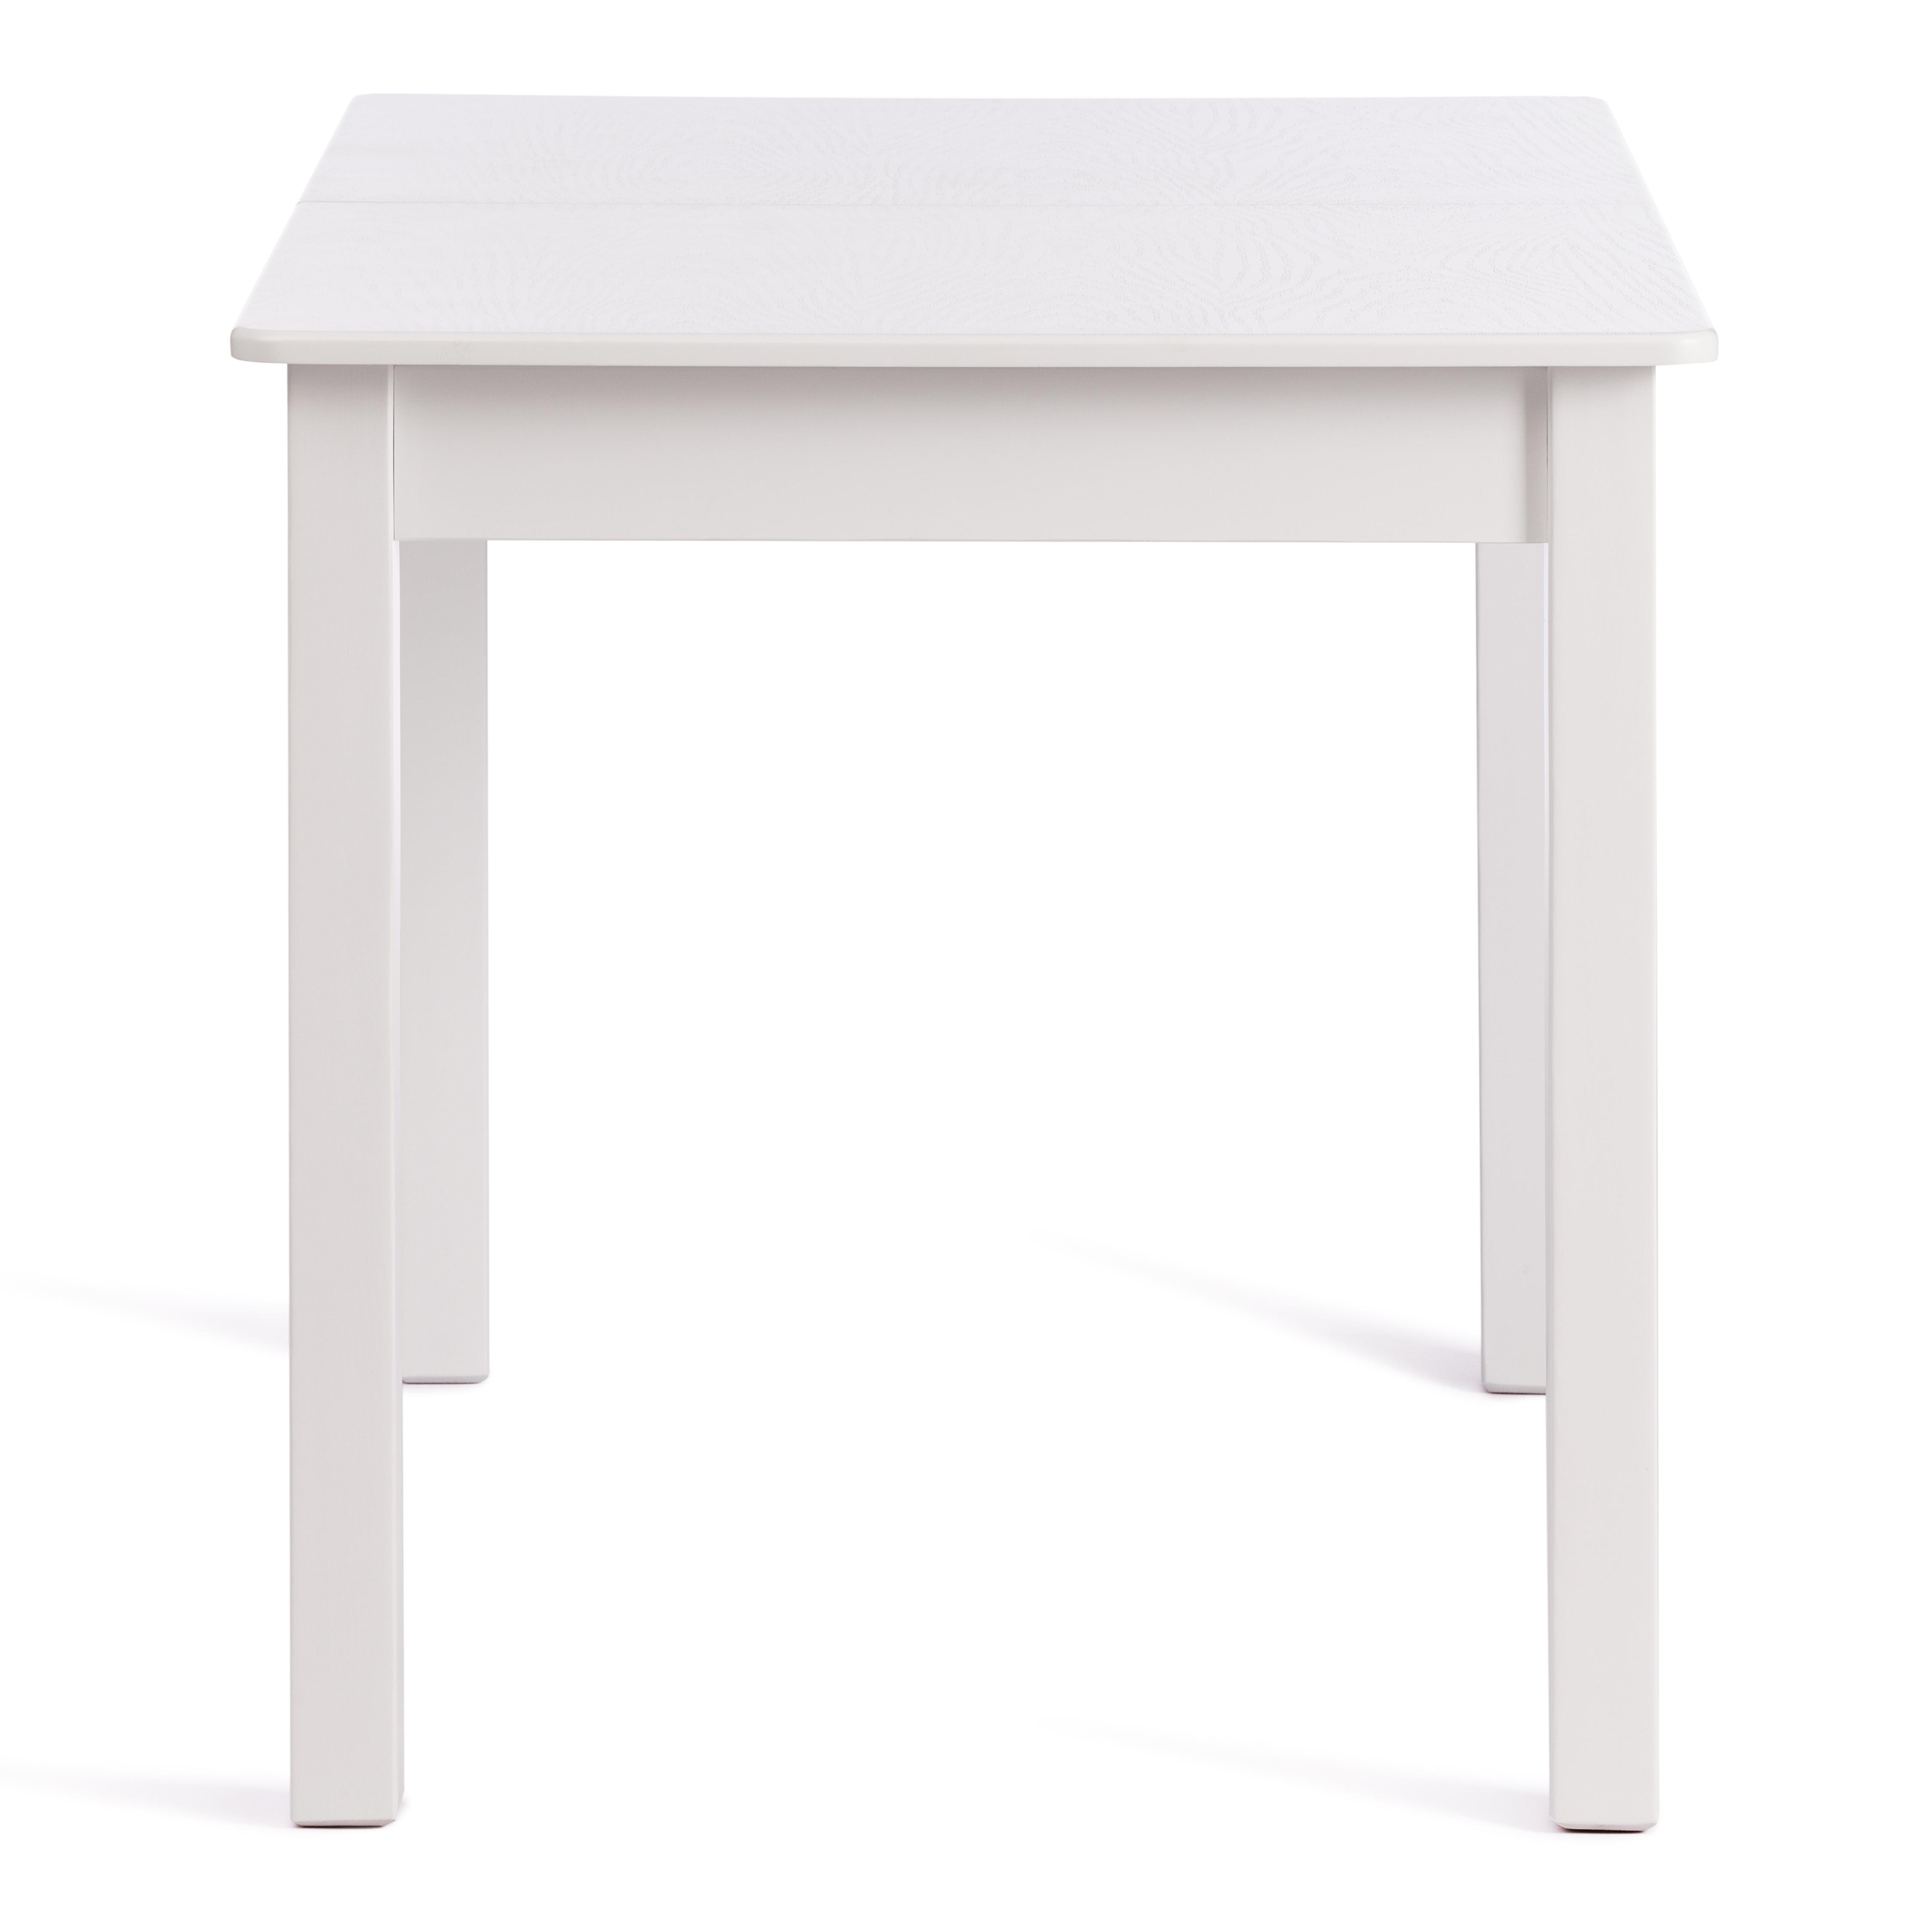 Стол MOSS раздвижной бук, мдф, 110+30 x 68 x 75 см, white (белый)